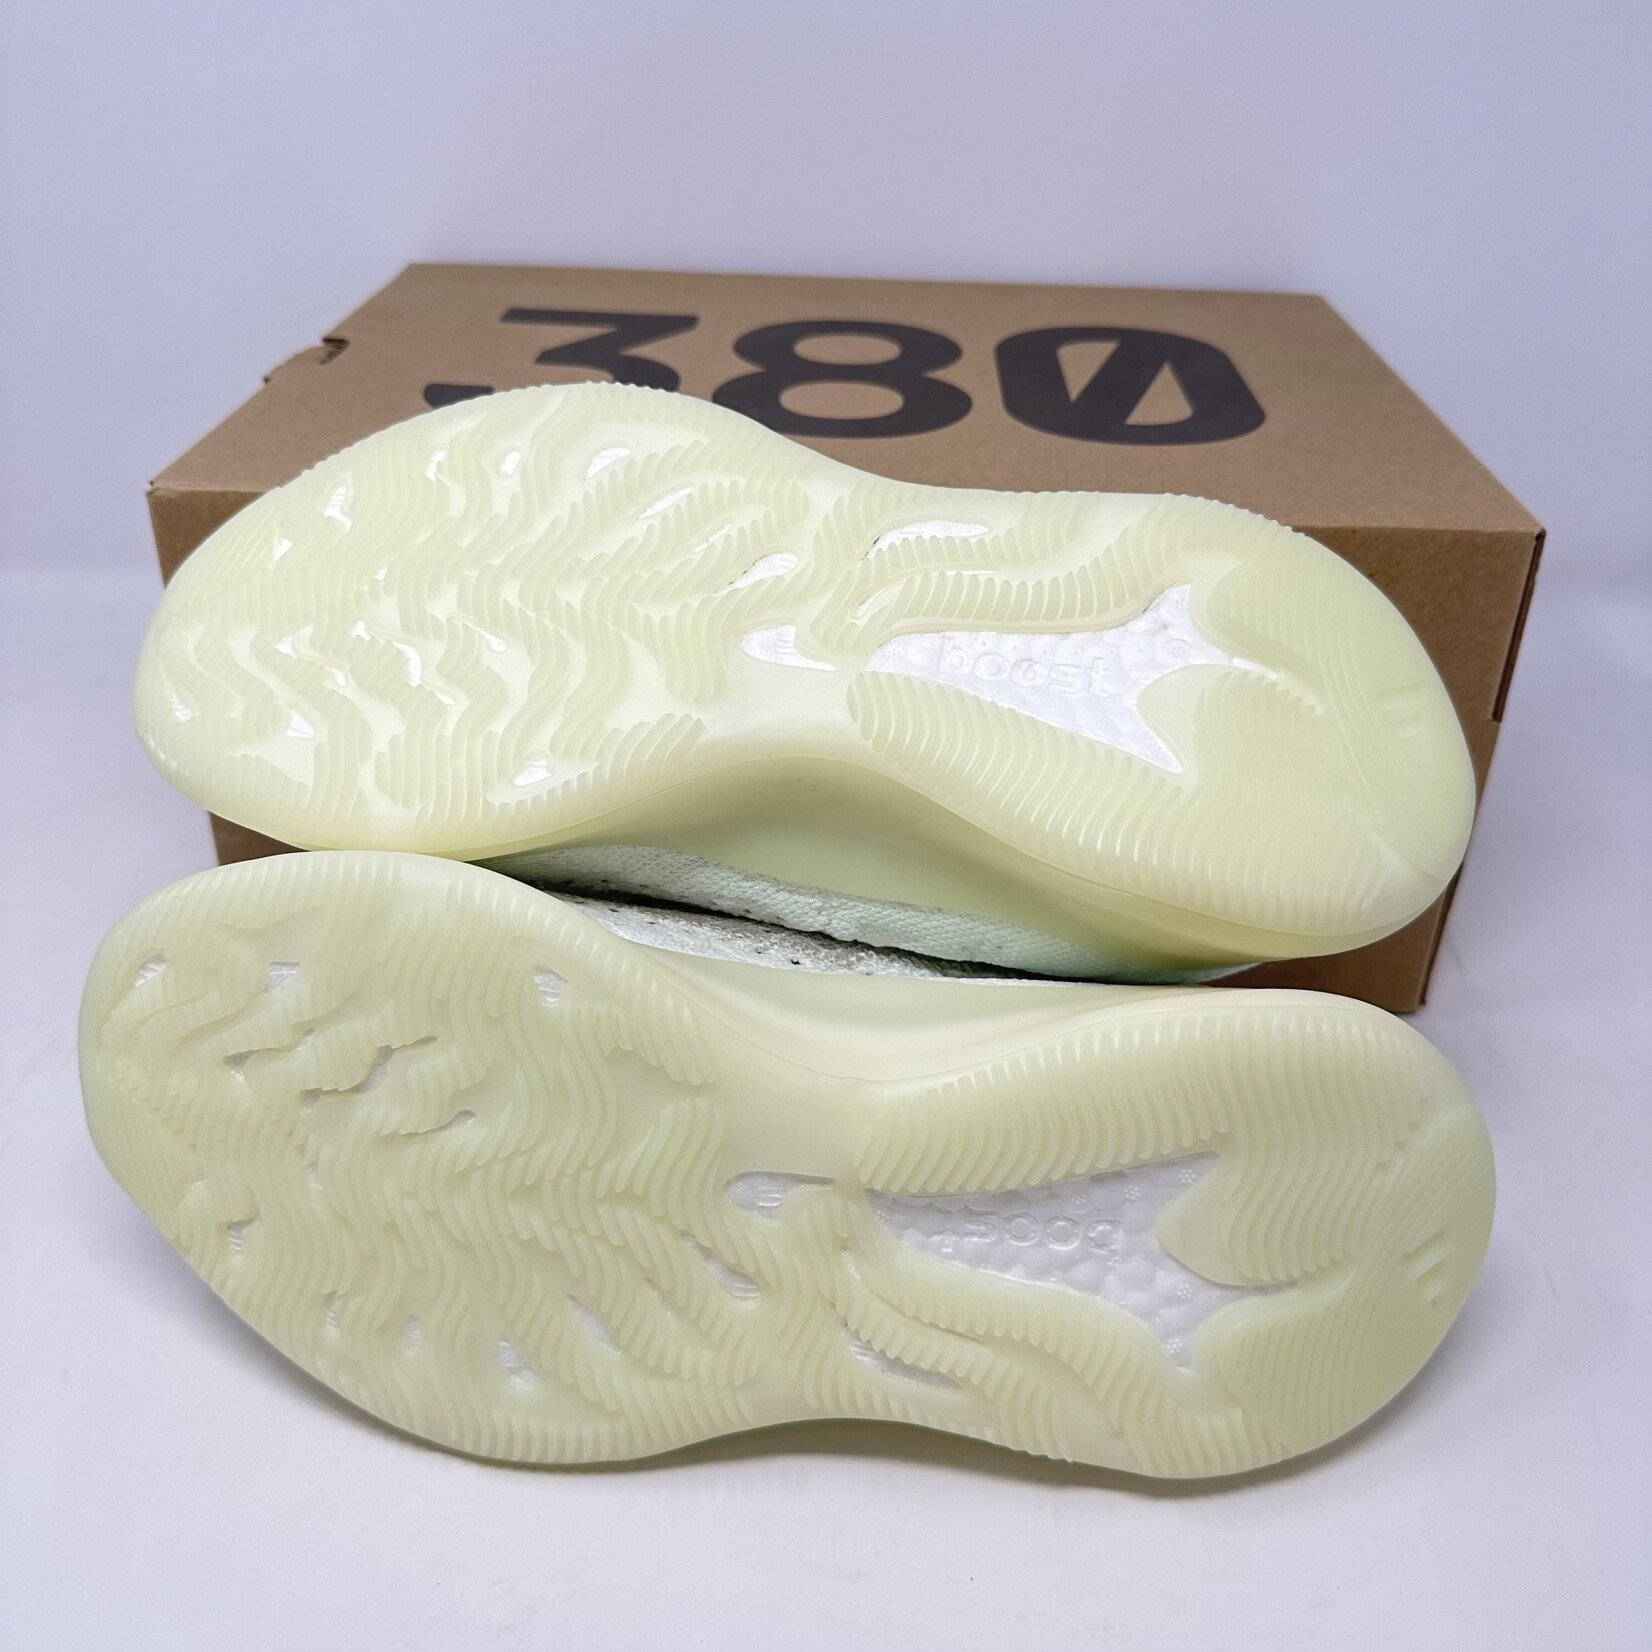 Adidas adidas Yeezy Boost 380 Calcite Glow